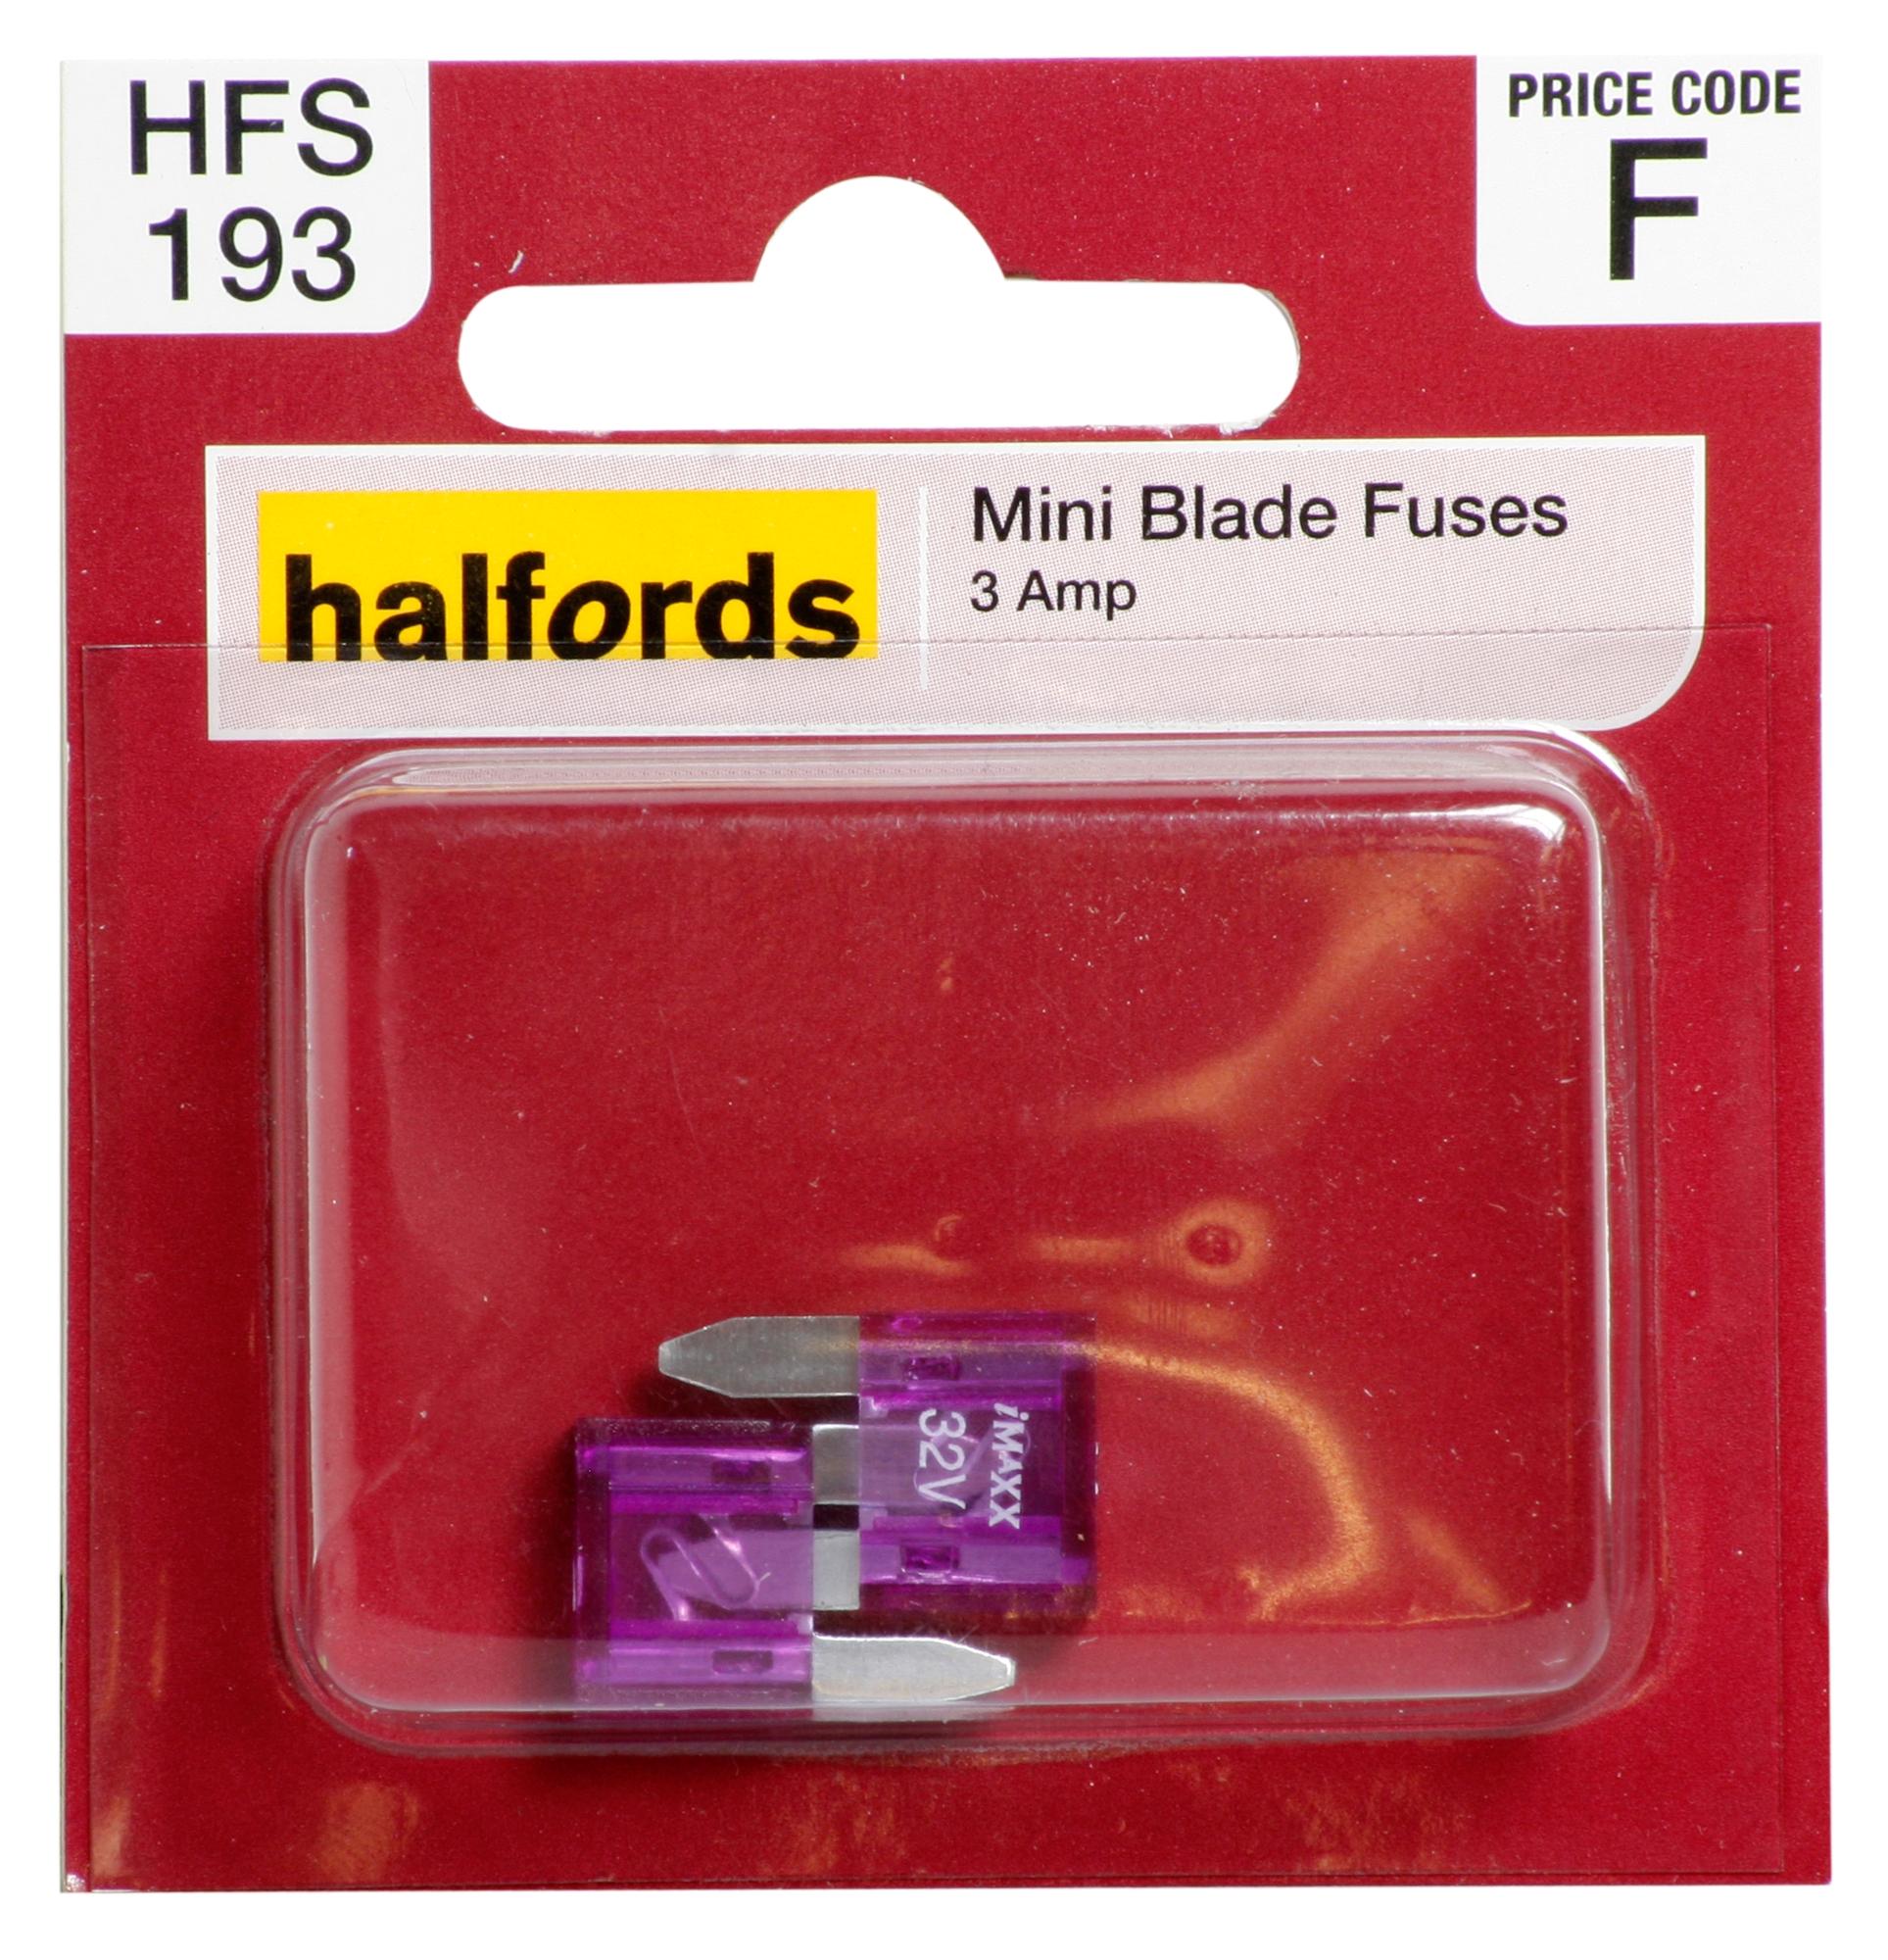 Halfords Mini Blade Fuses 3 Amp (Hfs193)